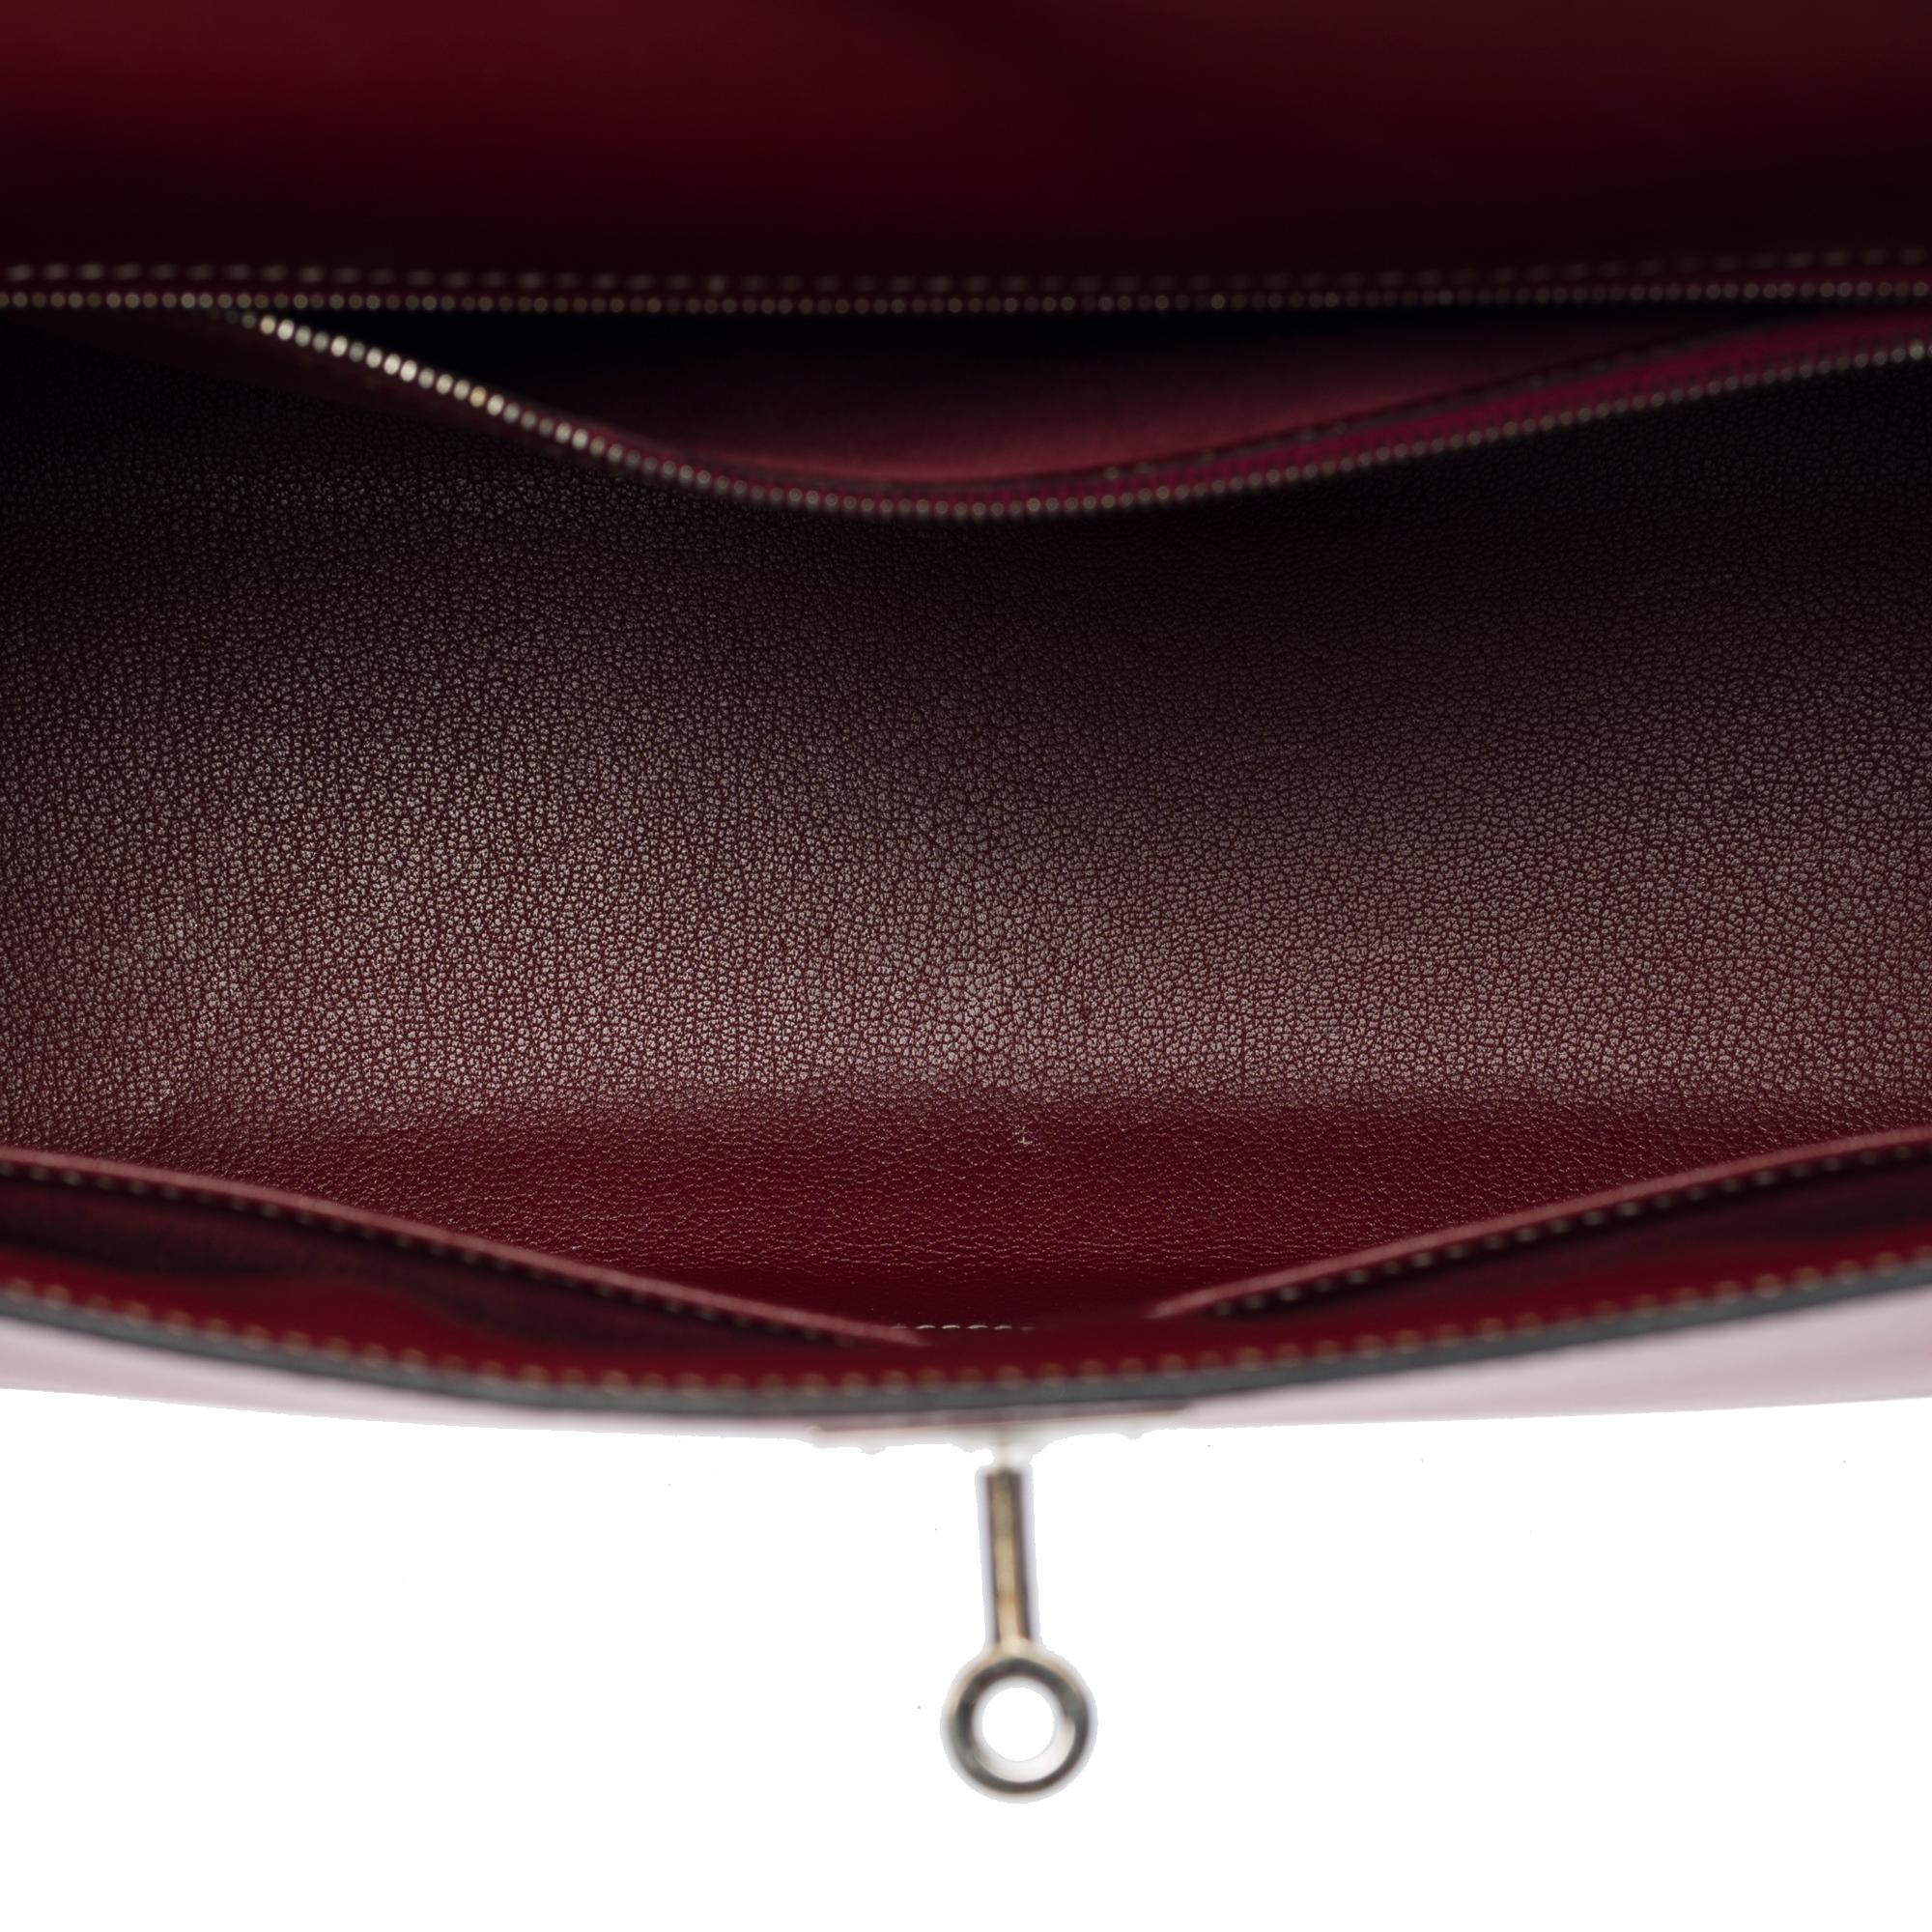 Very Rare Hermès Kelly 32 sellier handbag strap in Rouge H Chamonix leather, SHW 3